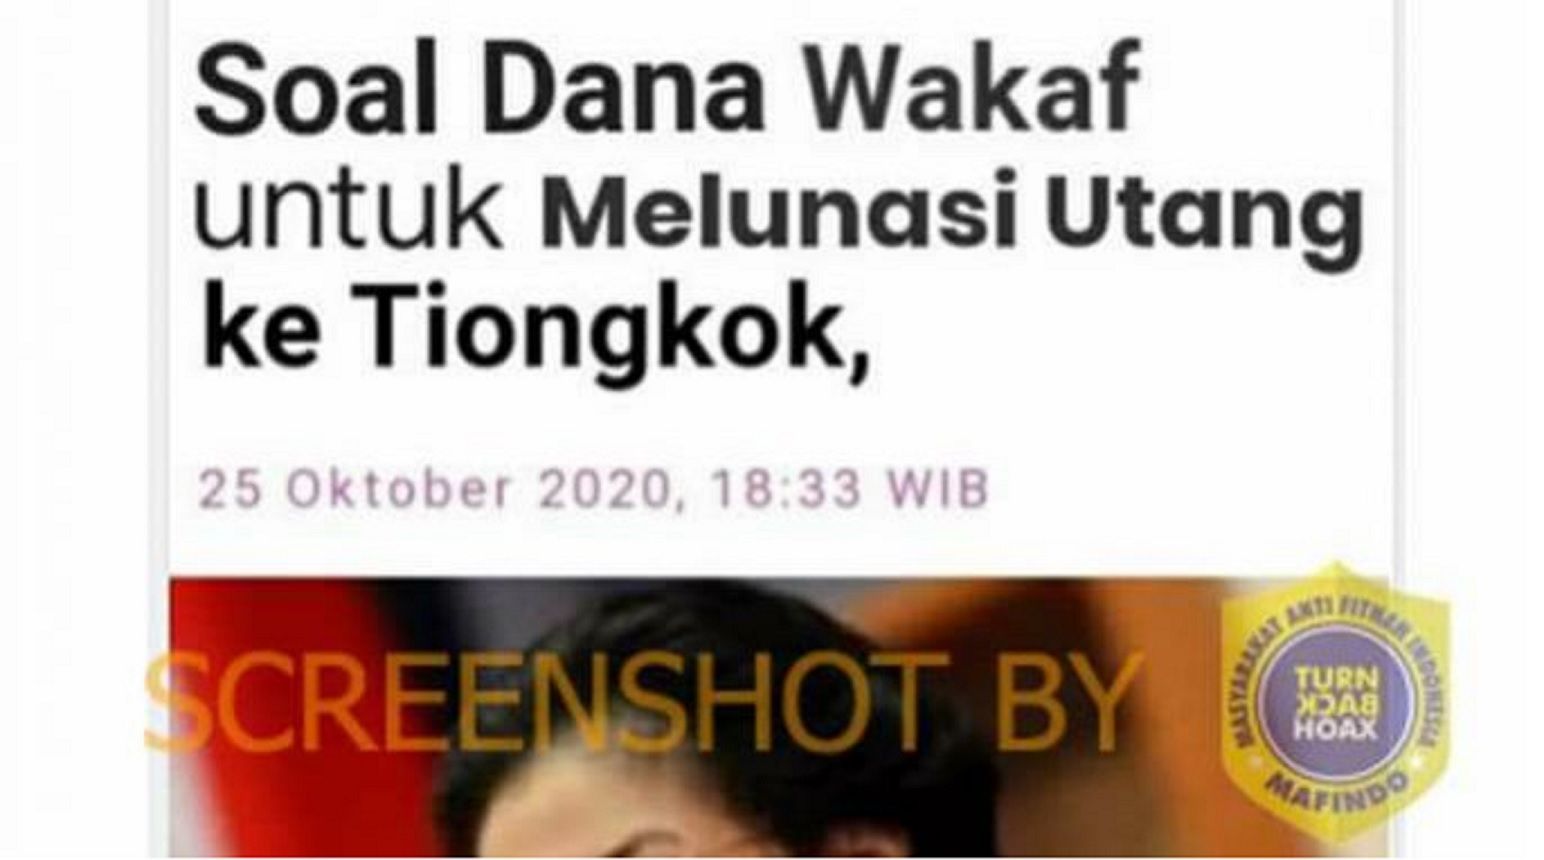 Tangkapan layar yang menyebut jika Megawati Soekarnoputri meminta Sri Mulyani melunasi utang ke Tiongkok memakai dana wakaf.